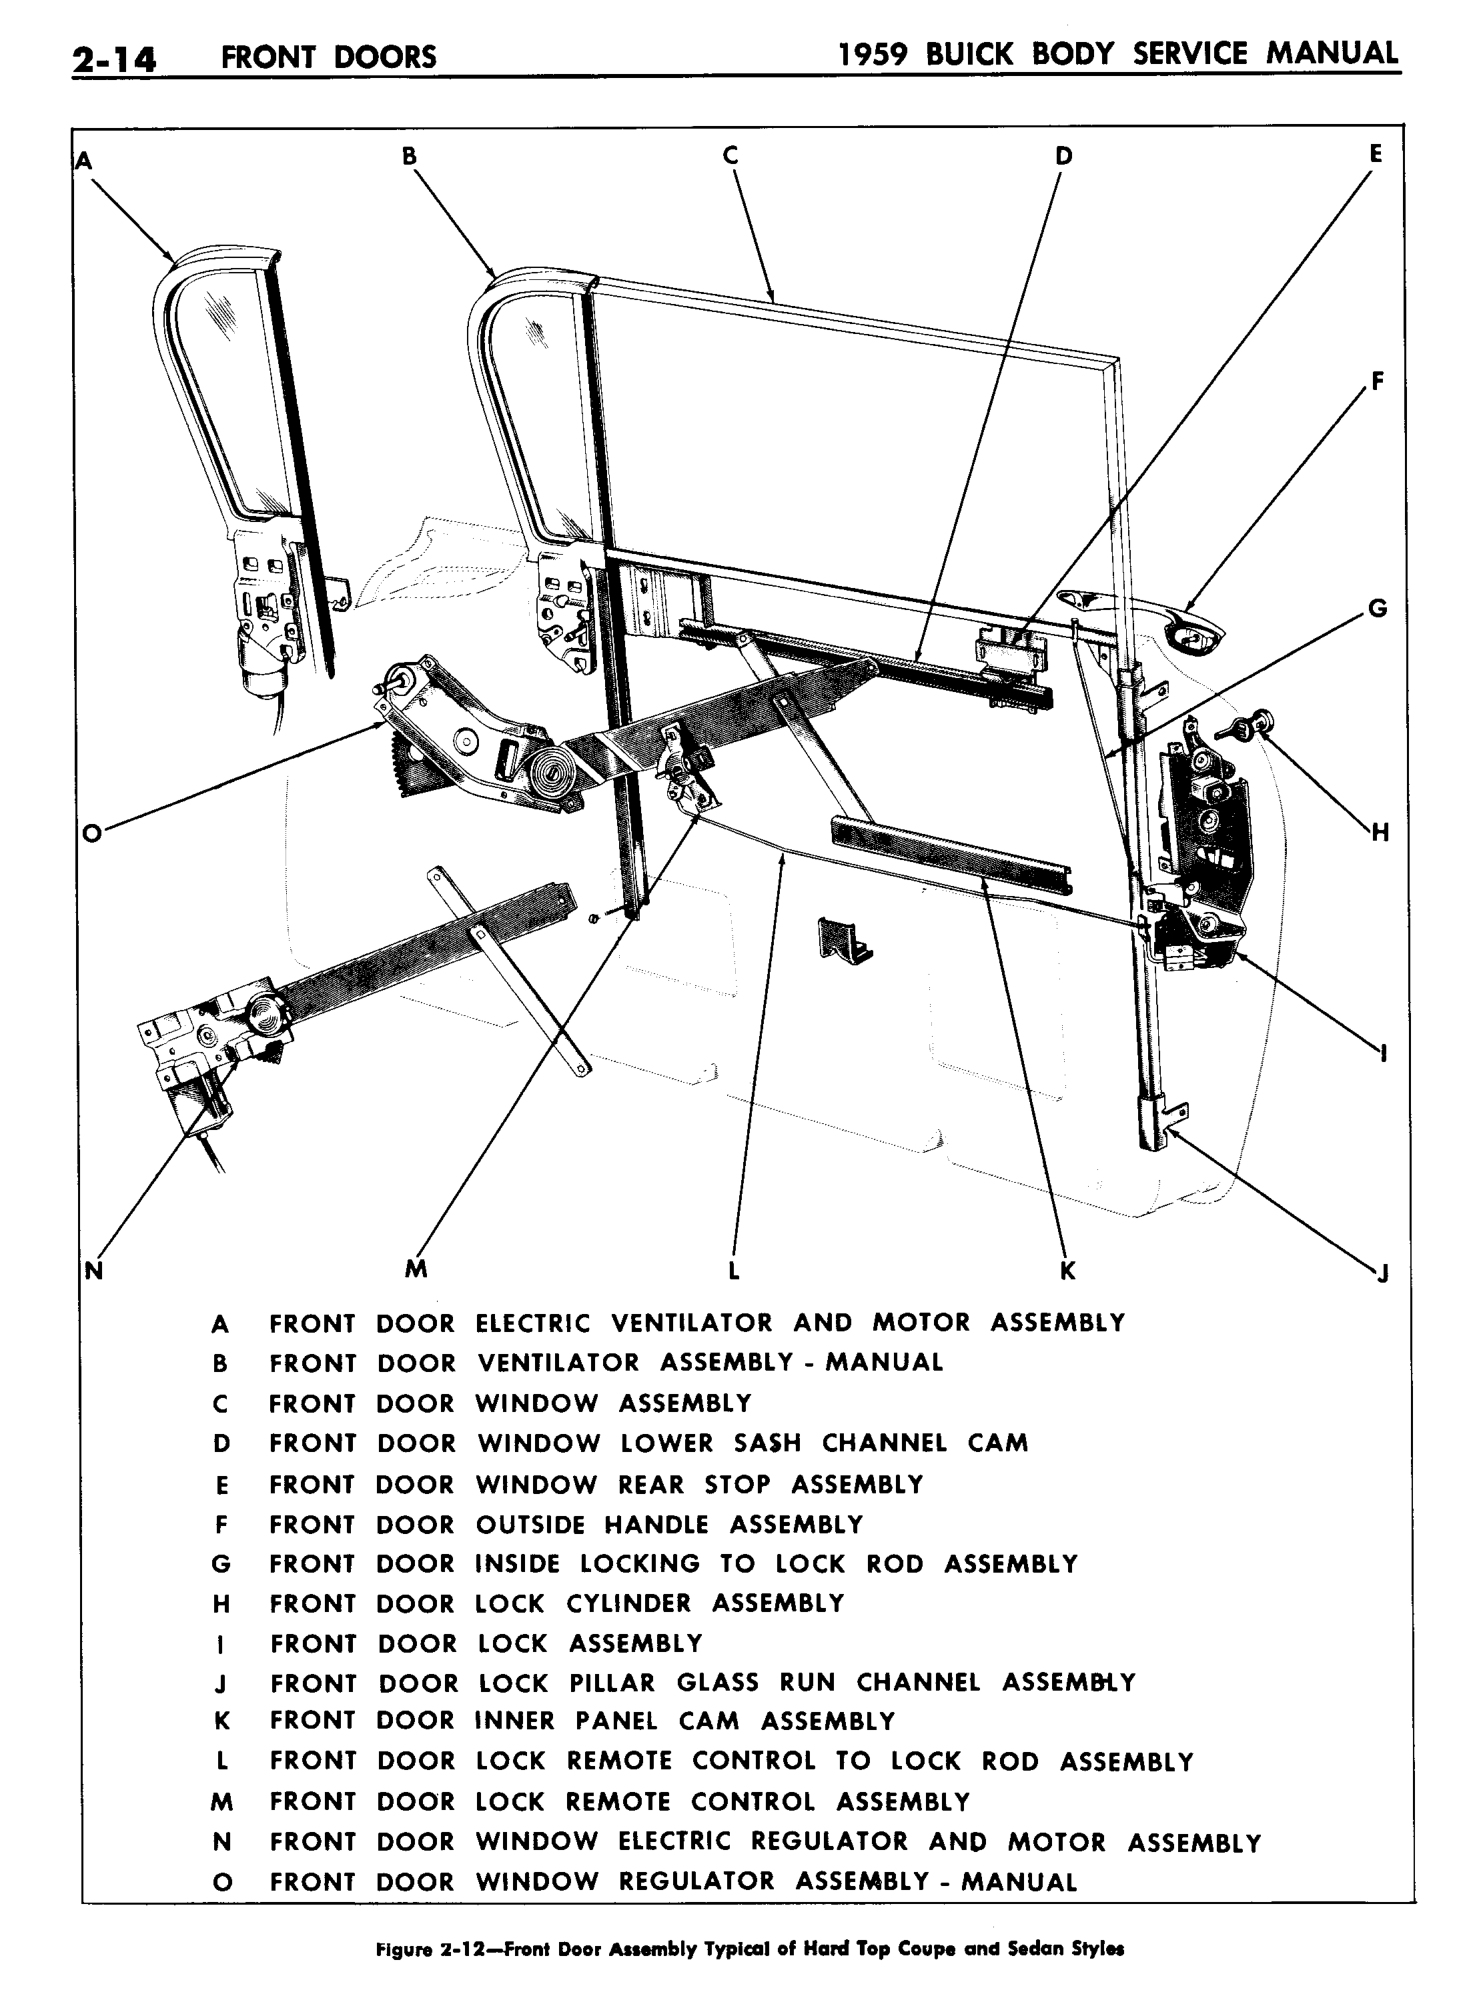 n_03 1959 Buick Body Service-Doors_14.jpg